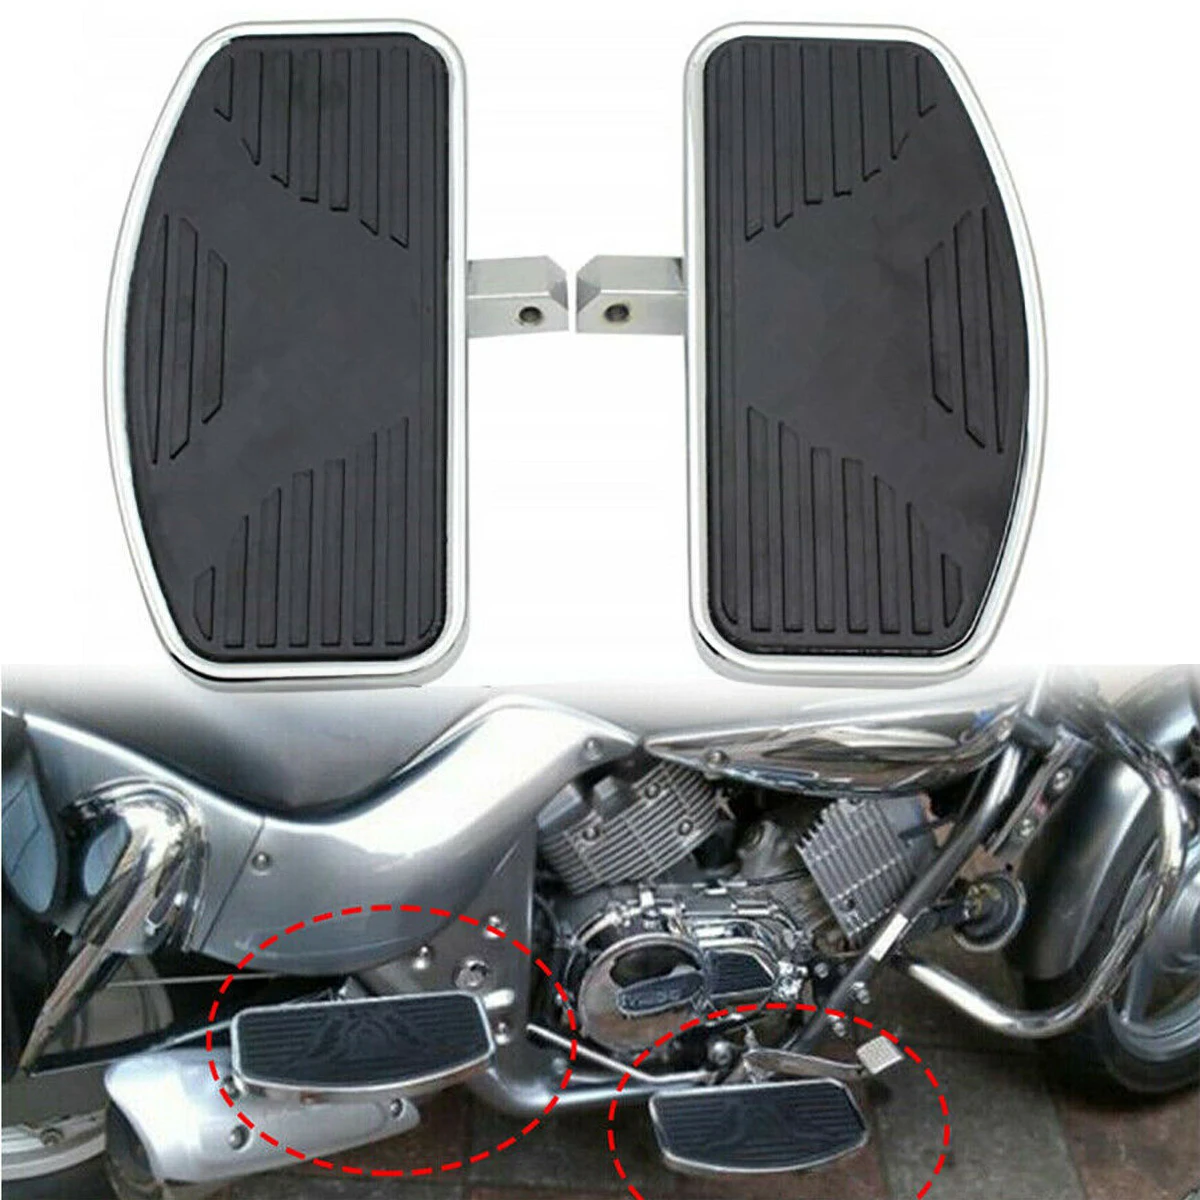 Chrome Foot Rider Driver Footrest Floorboards For Honda Shadow VTX 1300 1800 - £49.00 GBP